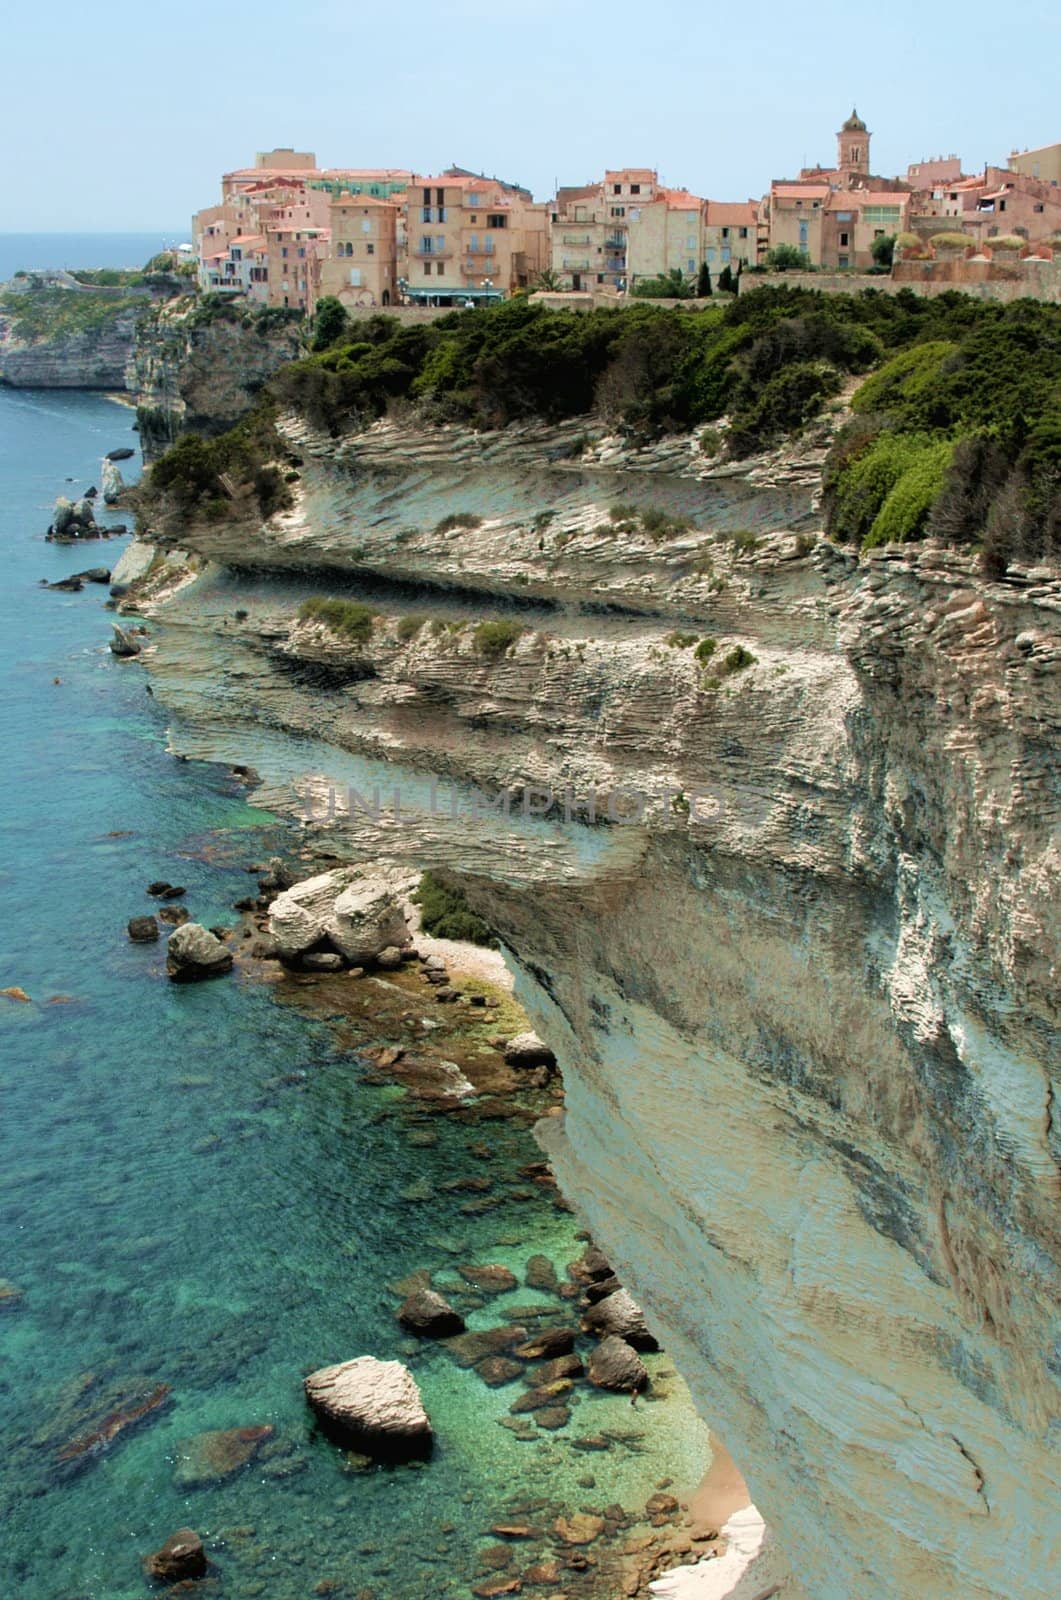 The city of Bonifacio, Corsica, France


